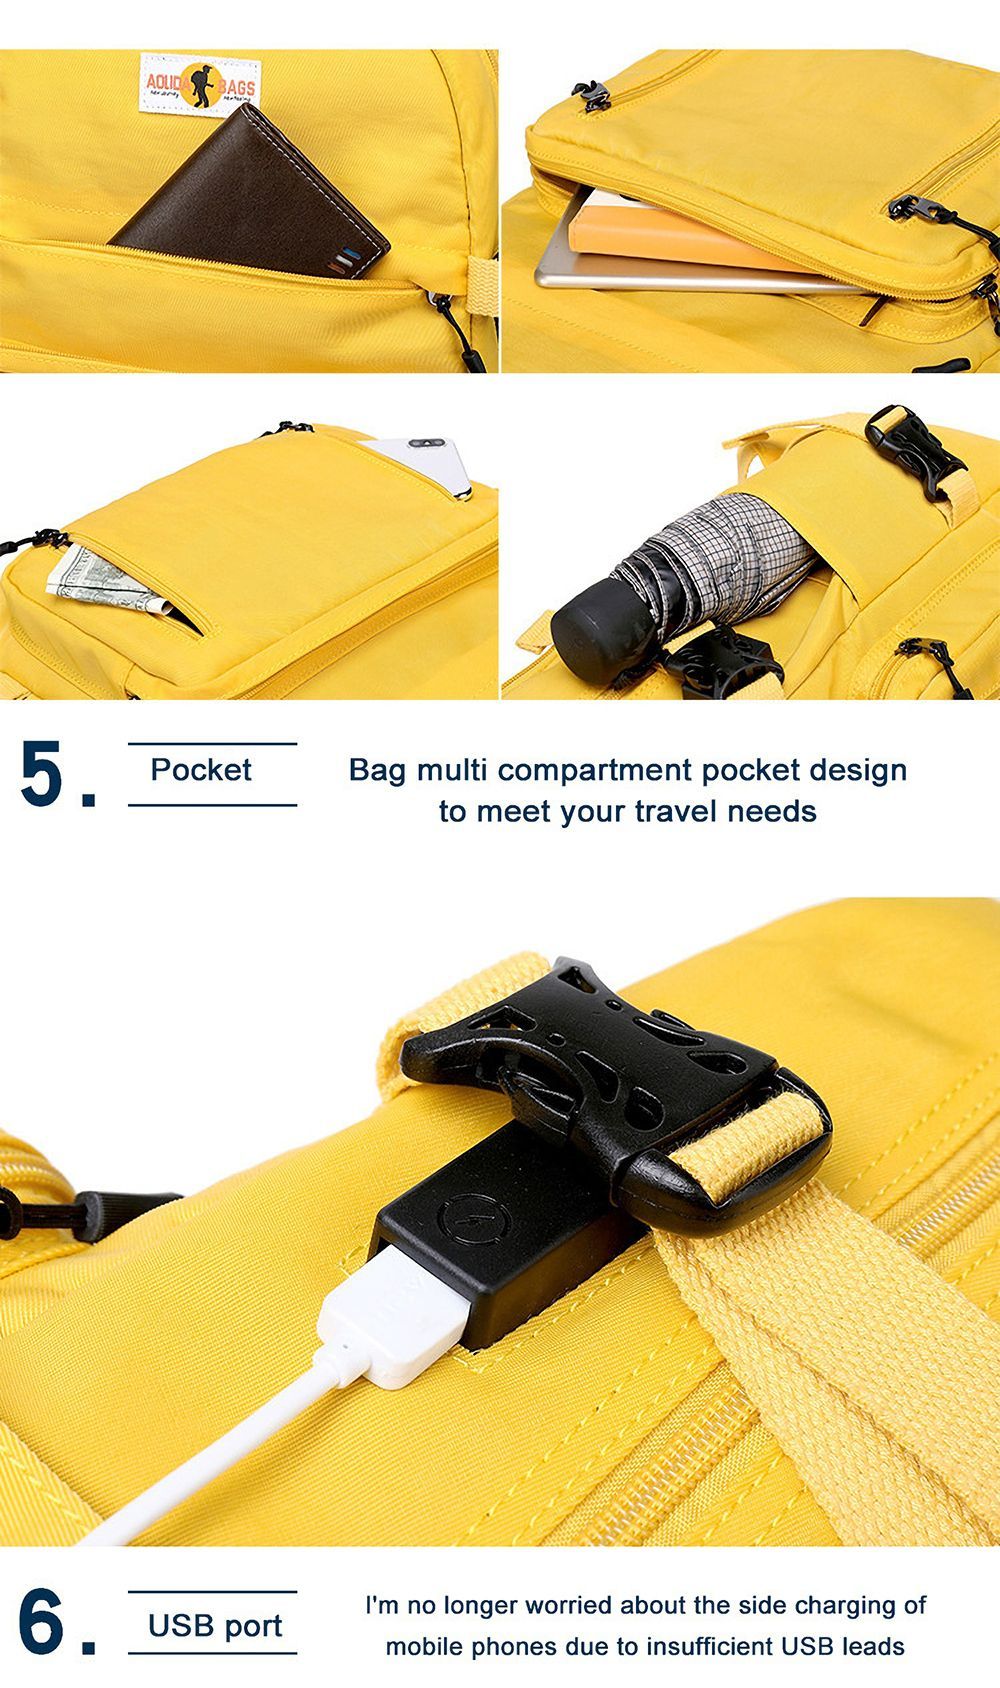 AOLIDA-18-inch-Backpacks-Laptop-Bag-USB-Charging-Women-Female-School-Bag-Travel-Bagpack-for-Teenager-1551704